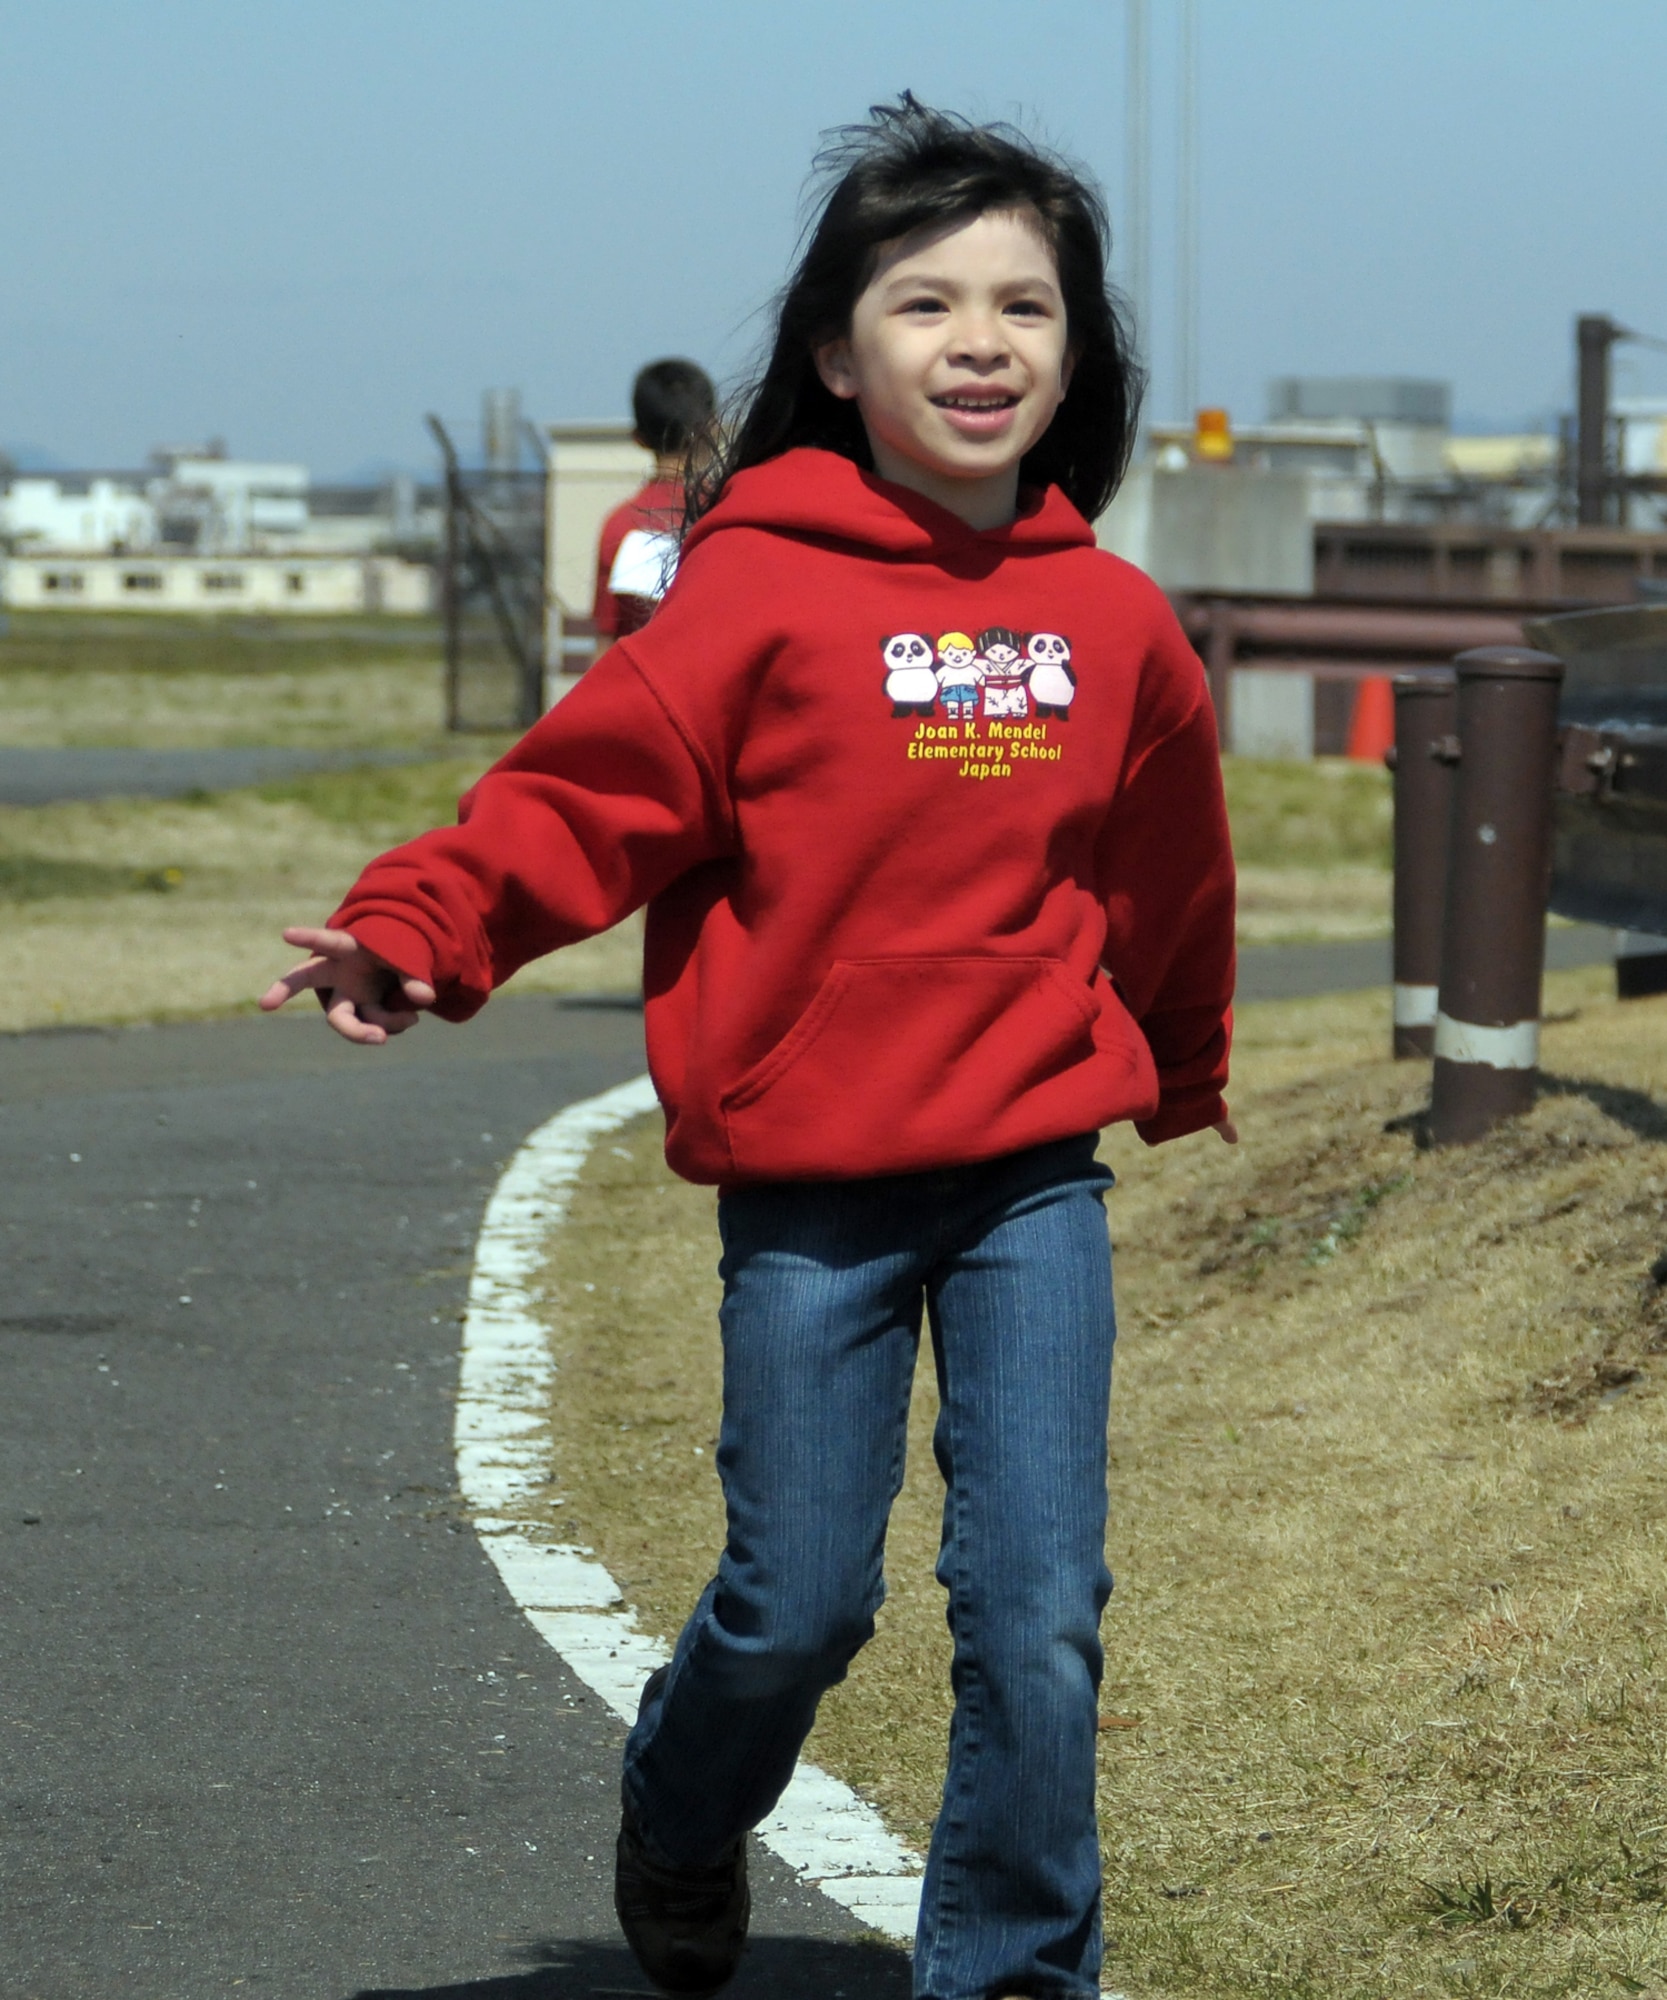 YOKOTA AIR BASE, Japan -- Alyssa Montiel, 2nd grader, runs as she finishes her 12th lap during the 2010 Jog/Walk-a-thon, April 8. The Jog/Walk-a-thon was held to raise money for Joan K. Mendel Elementary School. (U.S. Air Force photo/Airman 1st Class Katrina R. Menchaca)